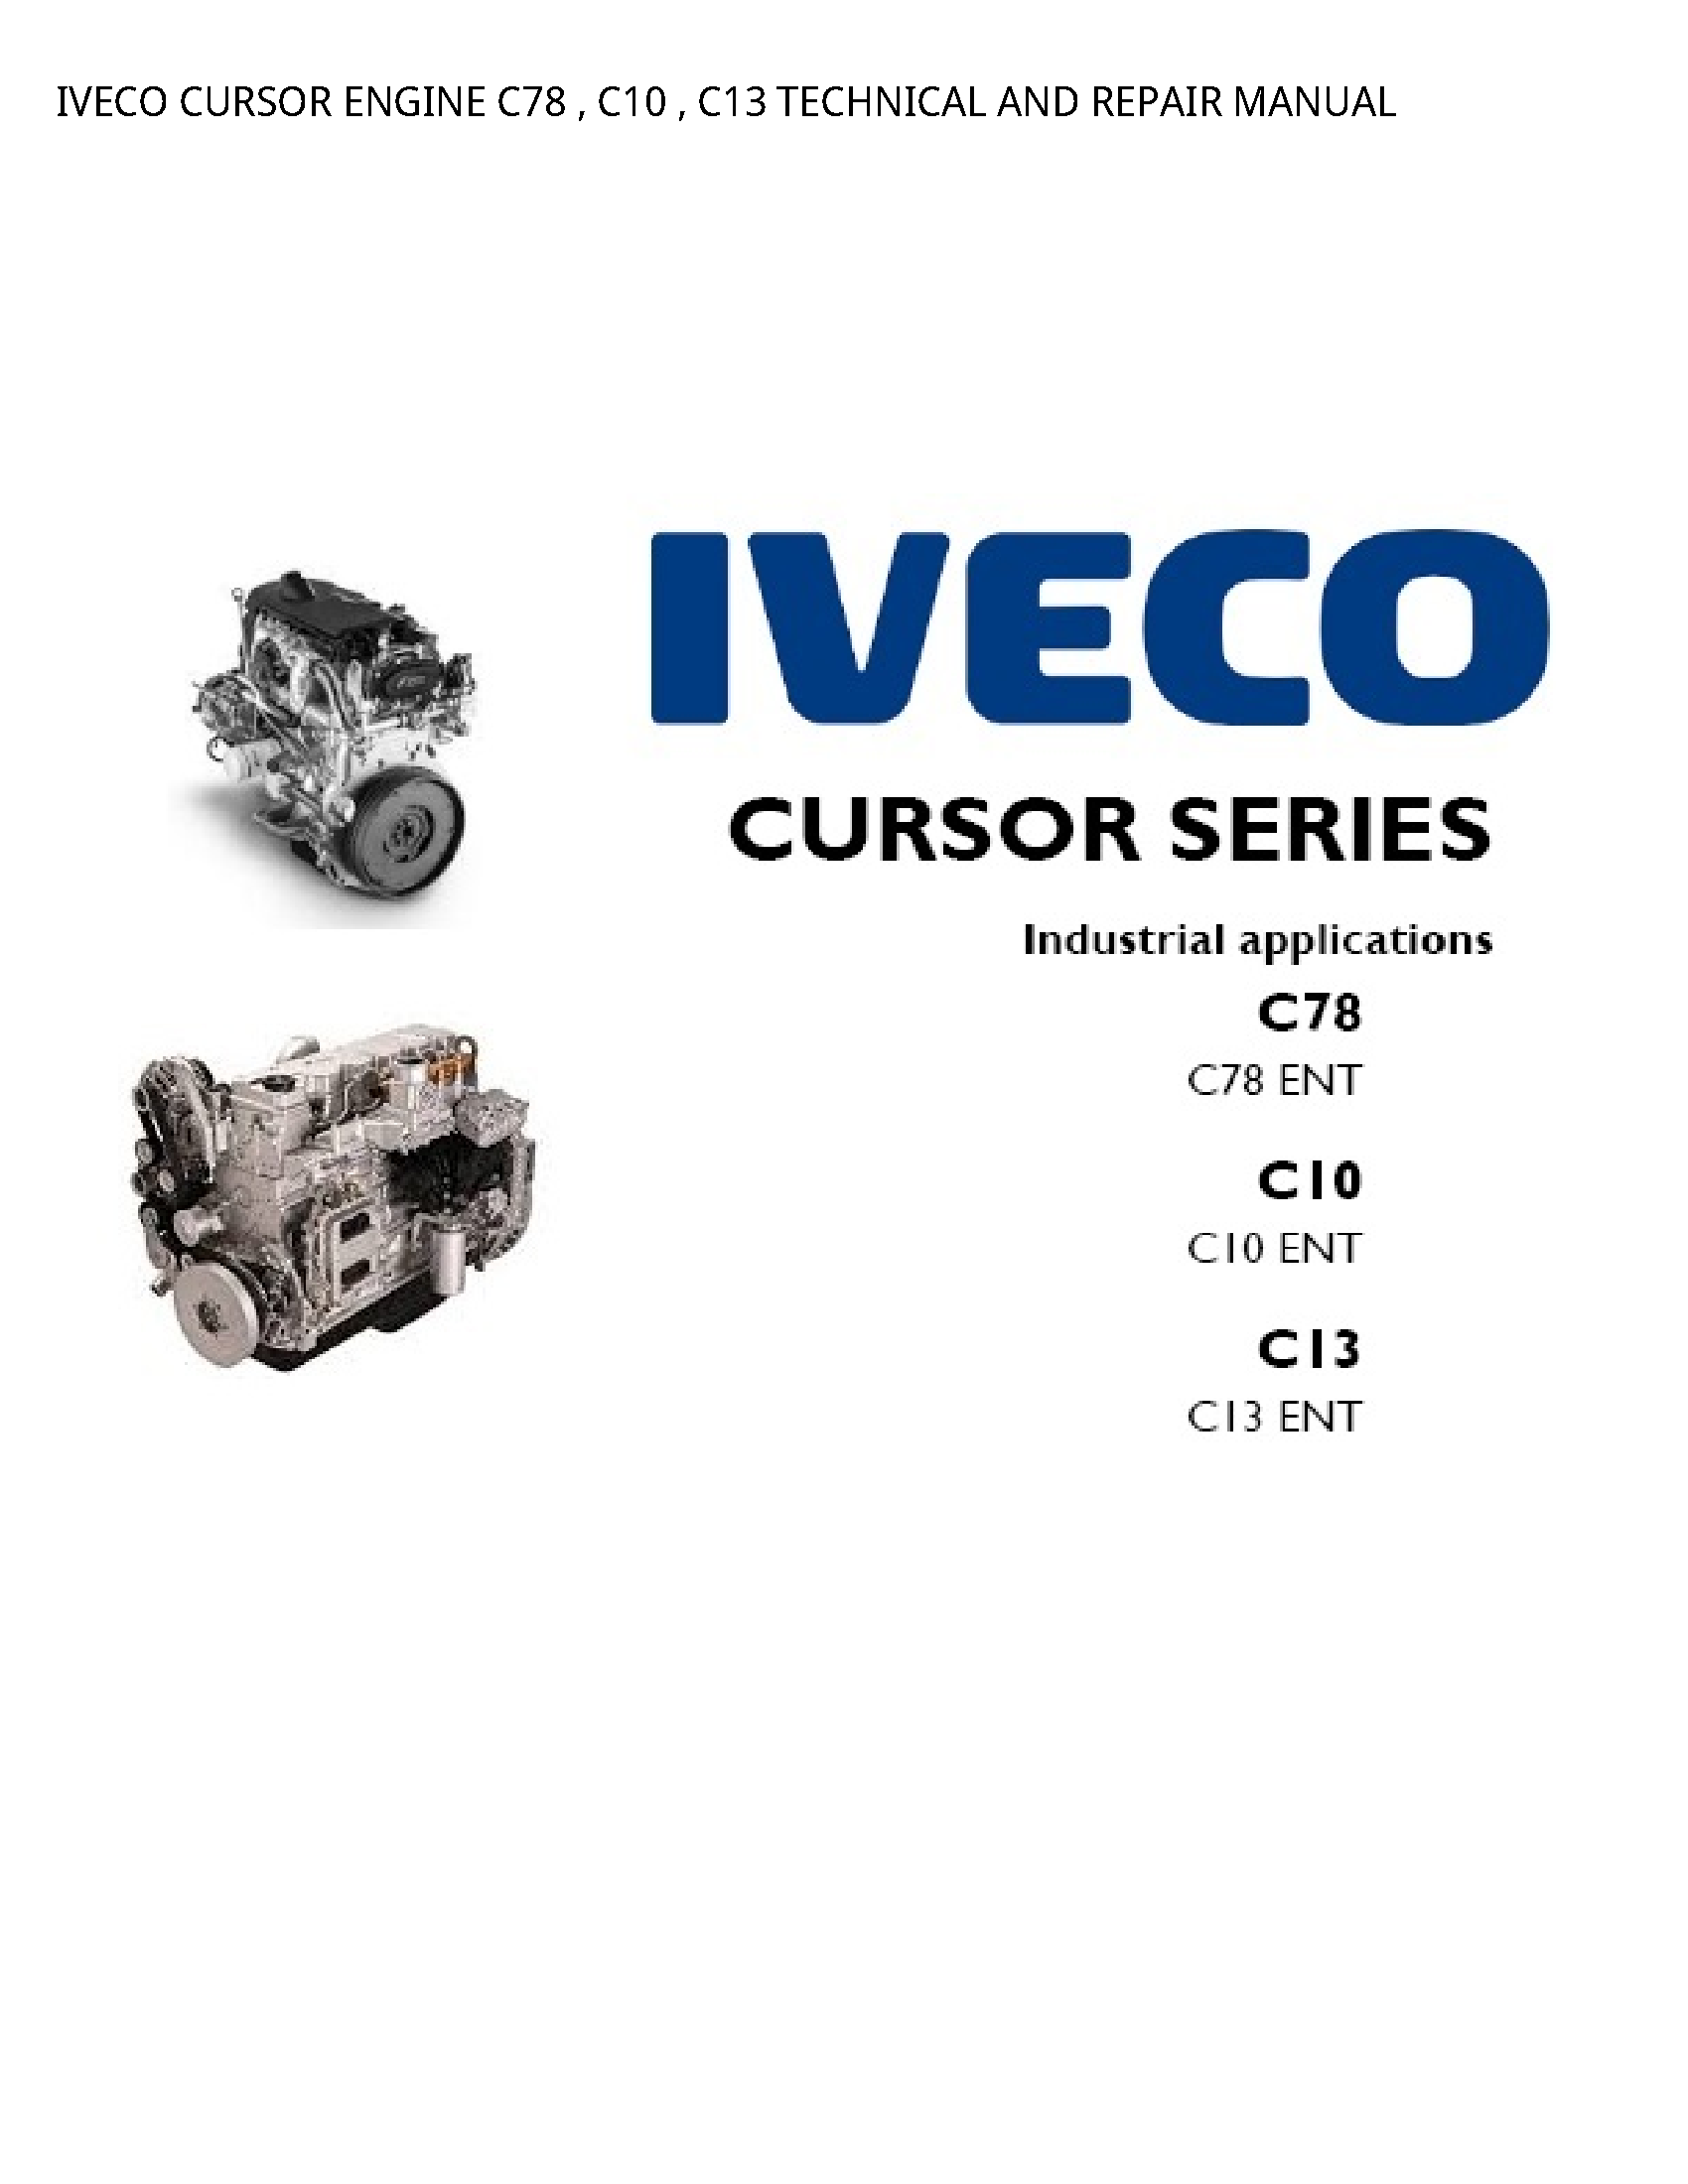 Iveco C78 CURSOR ENGINE TECHNICAL AND REPAIR manual